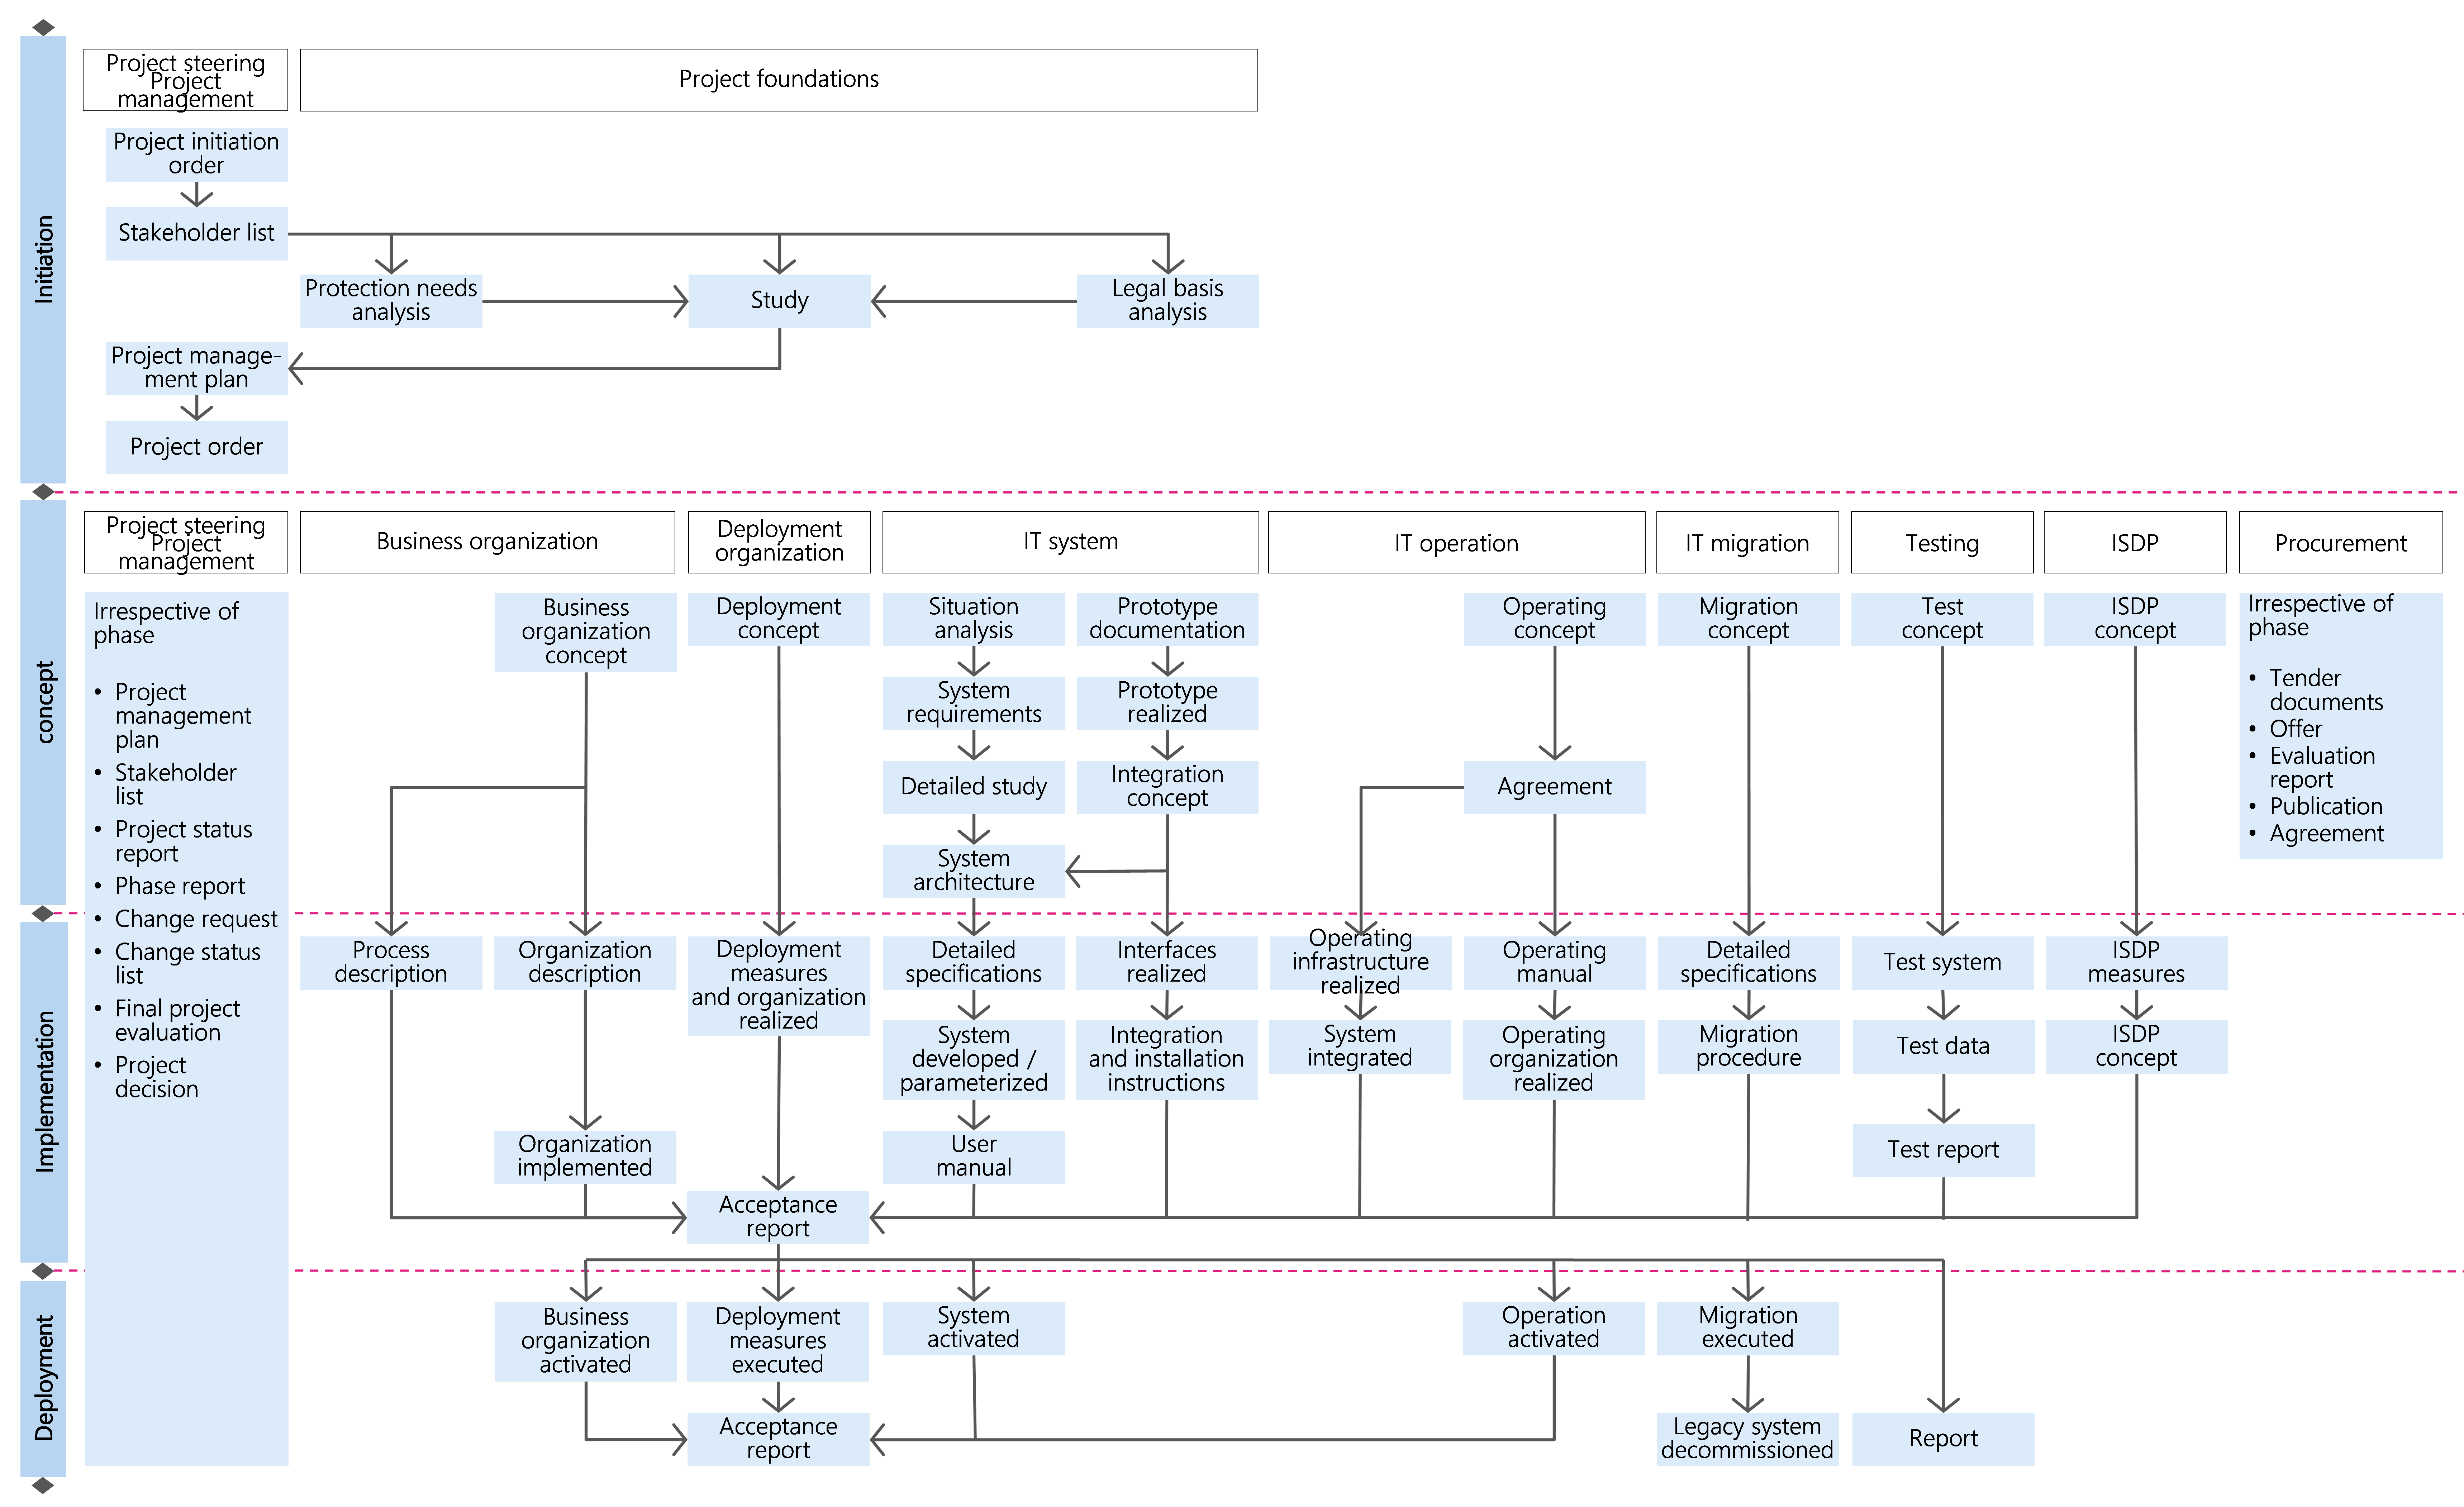 Figure 15: Outcomes of the customized IT application scenario modules